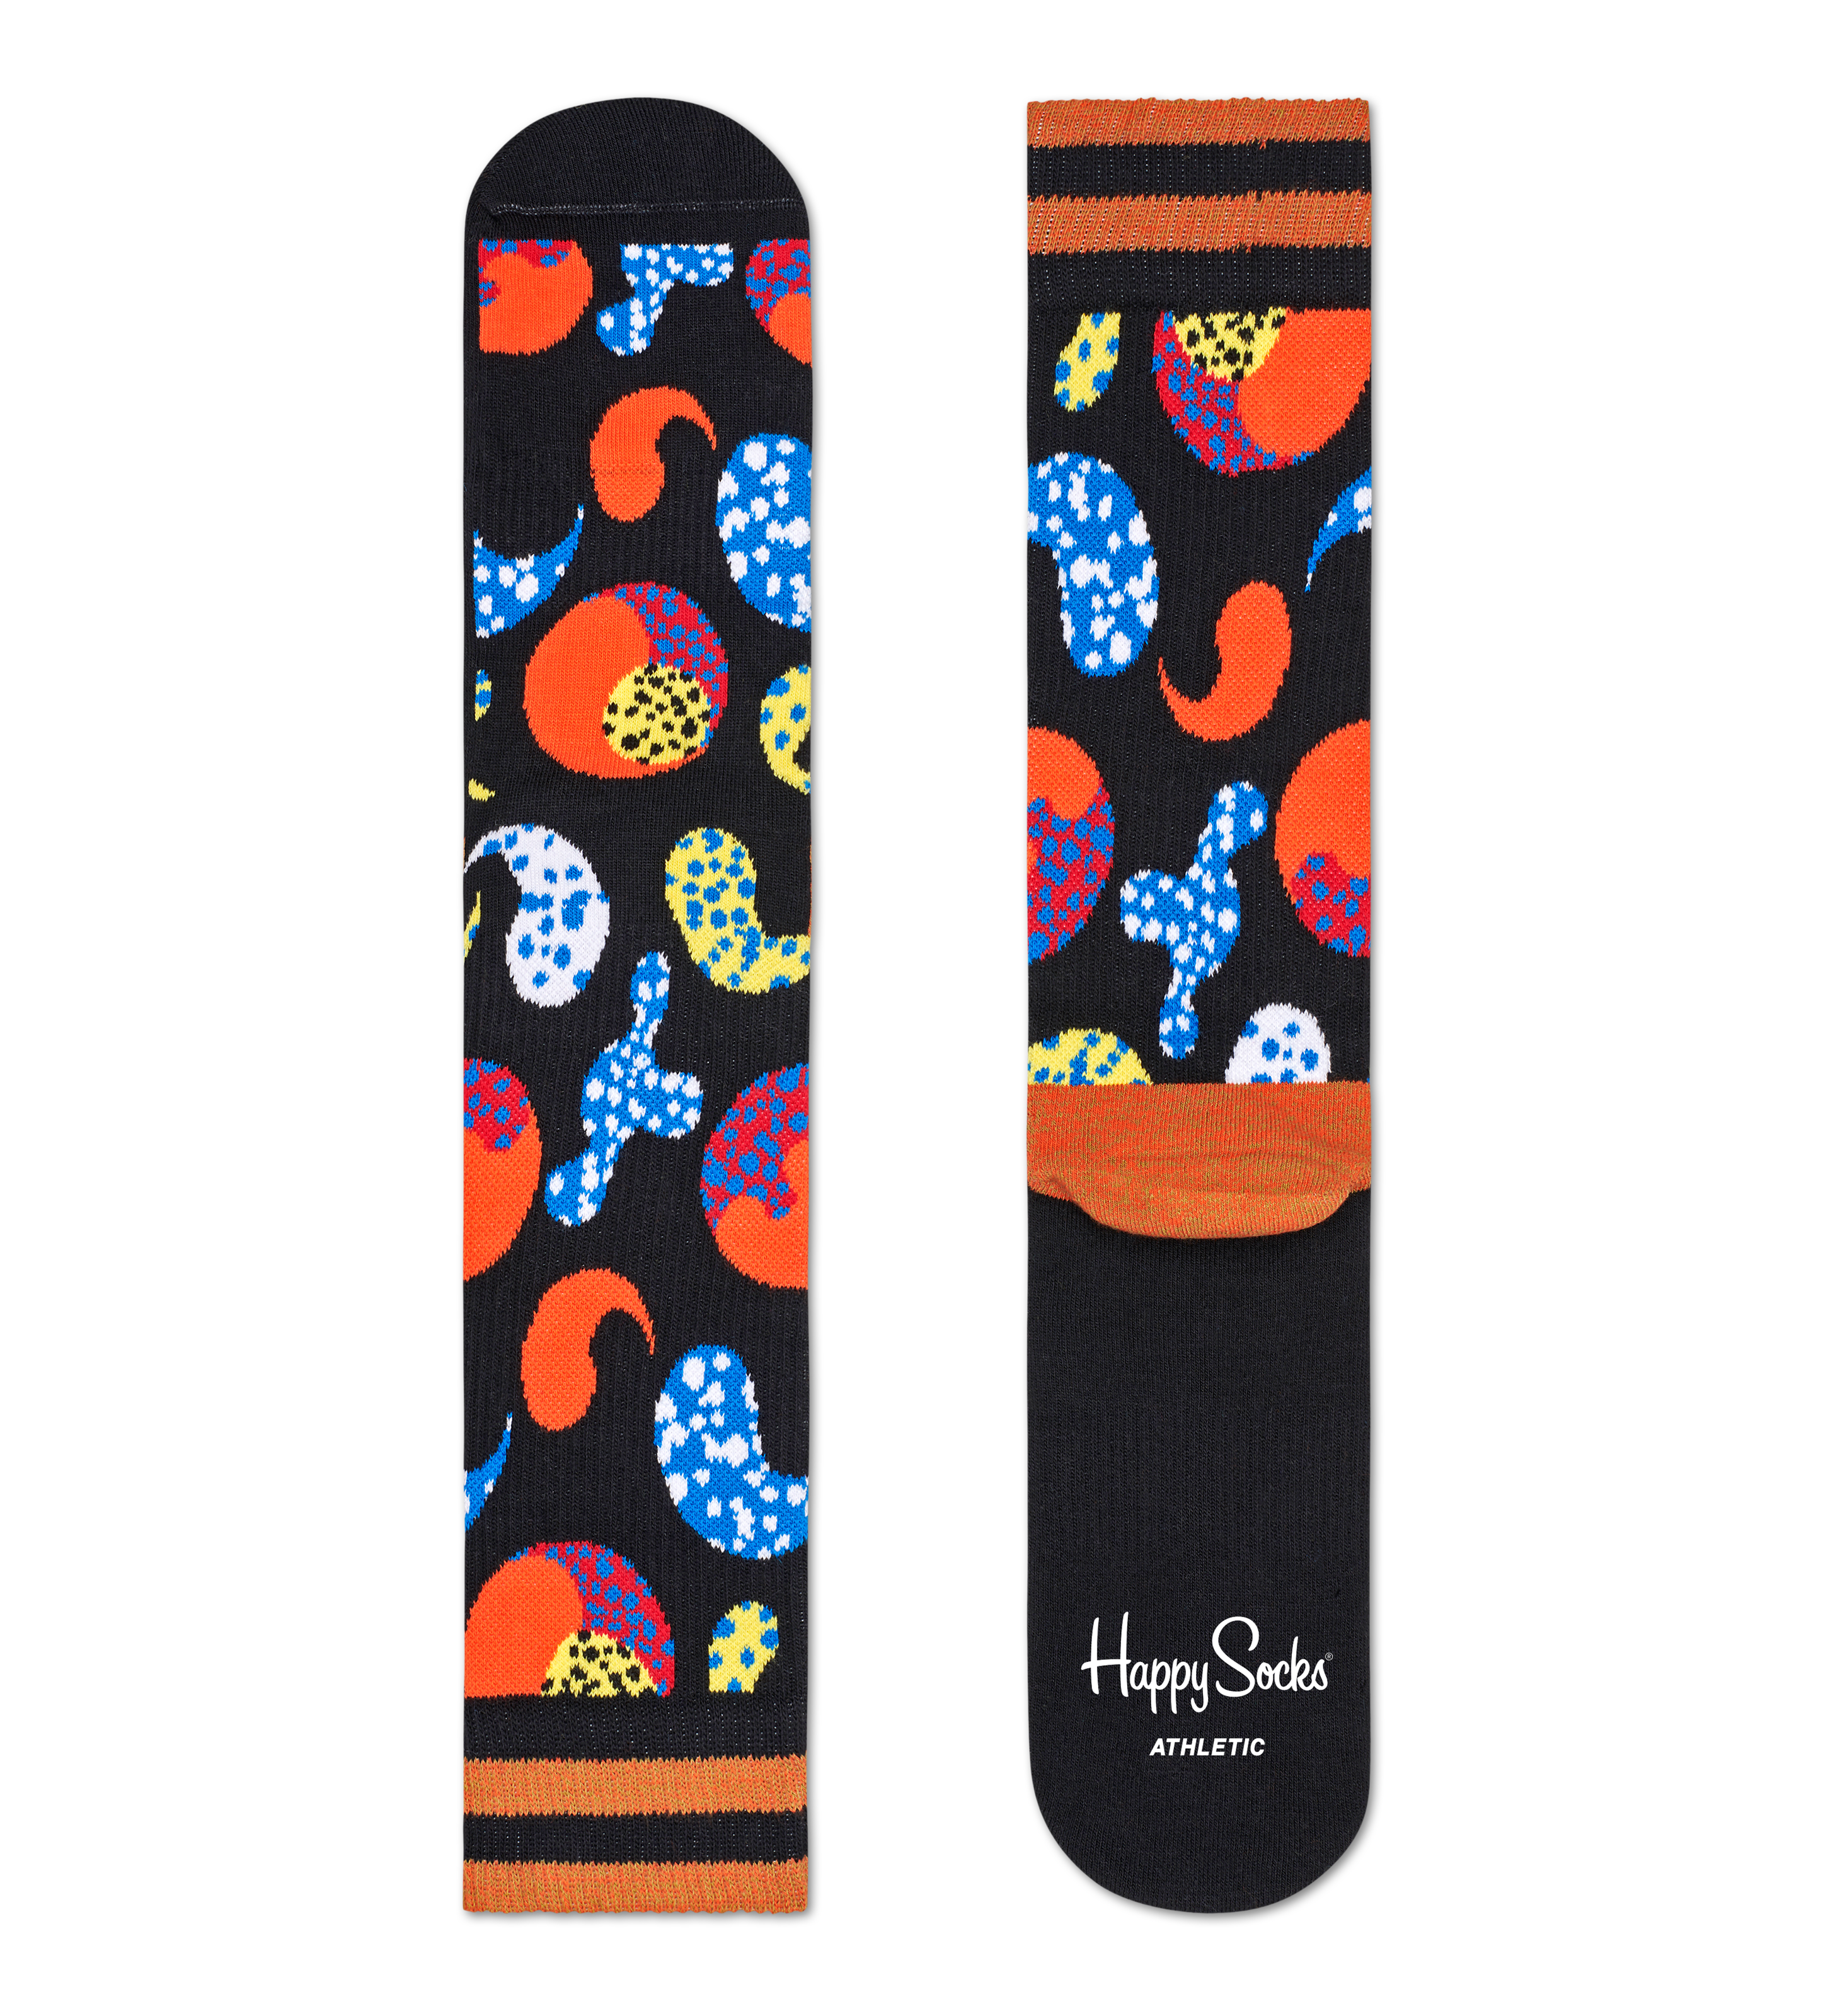 Yin Yang Socks, Black - ATHLETIC | Happy Socks